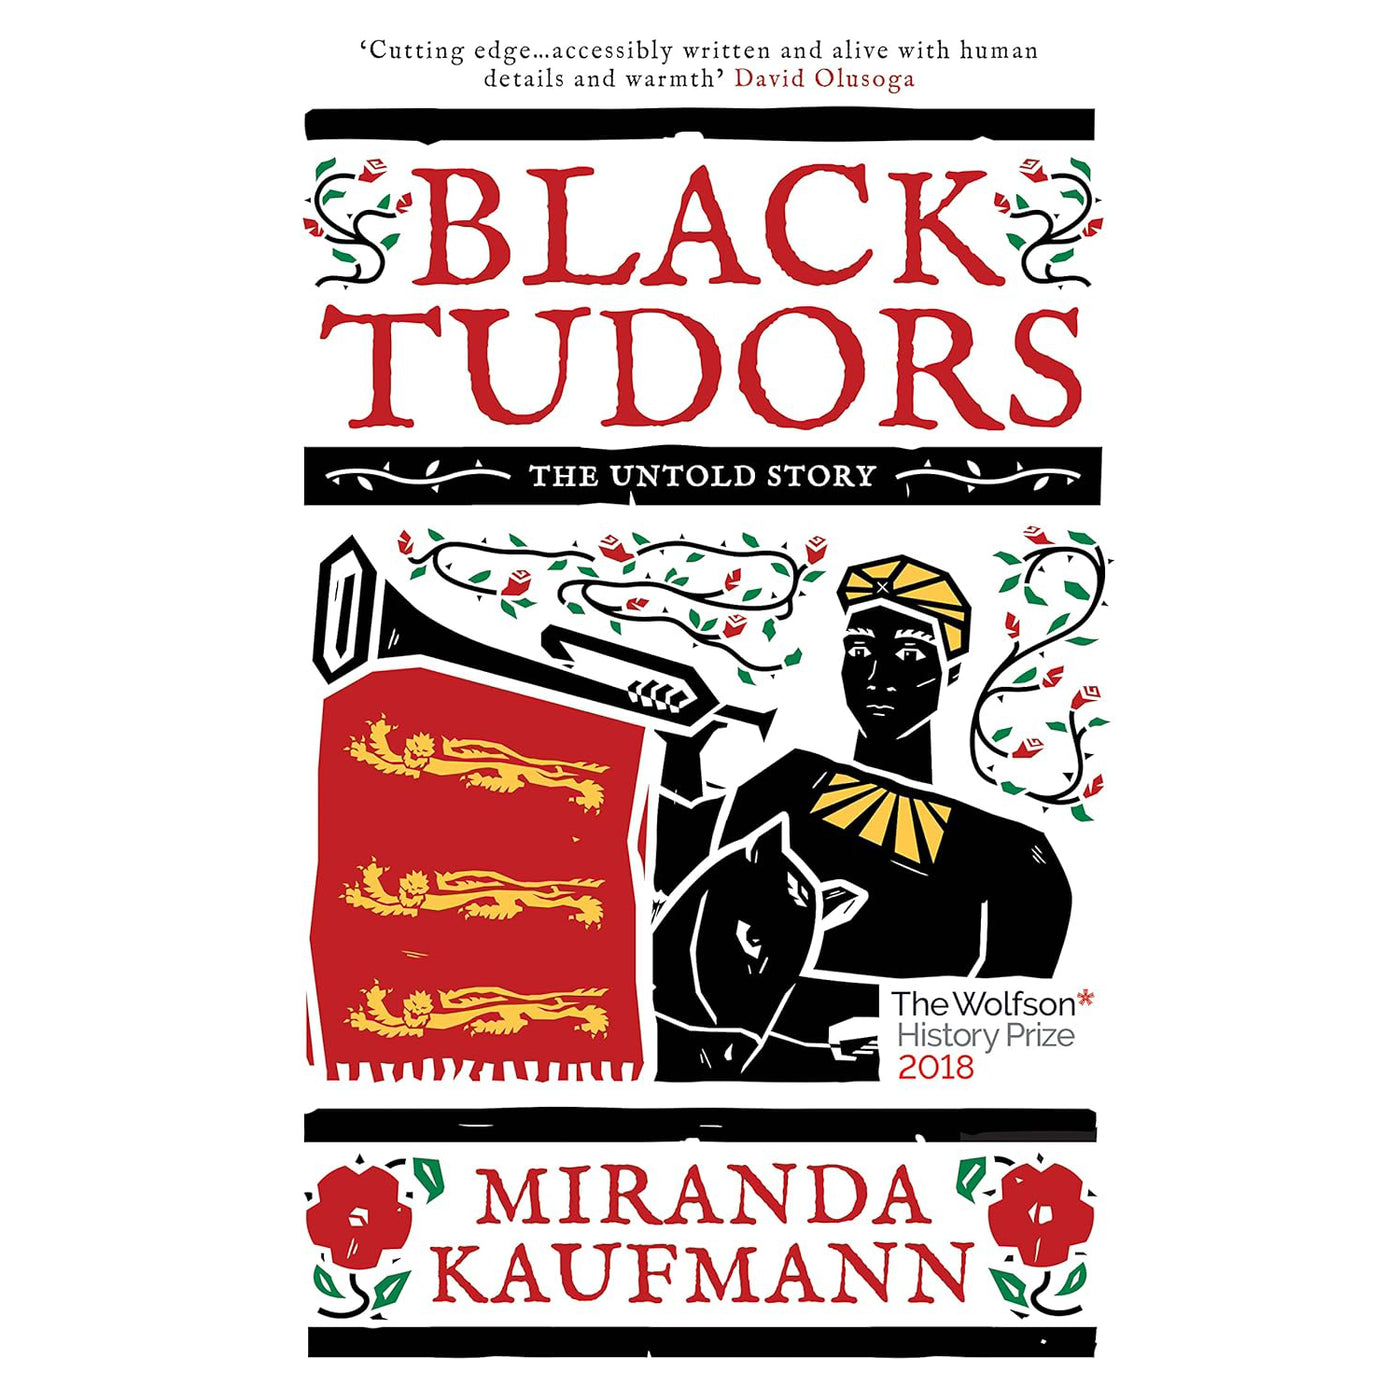 Black Tudors: The Untold Story by Miranda Kaufman